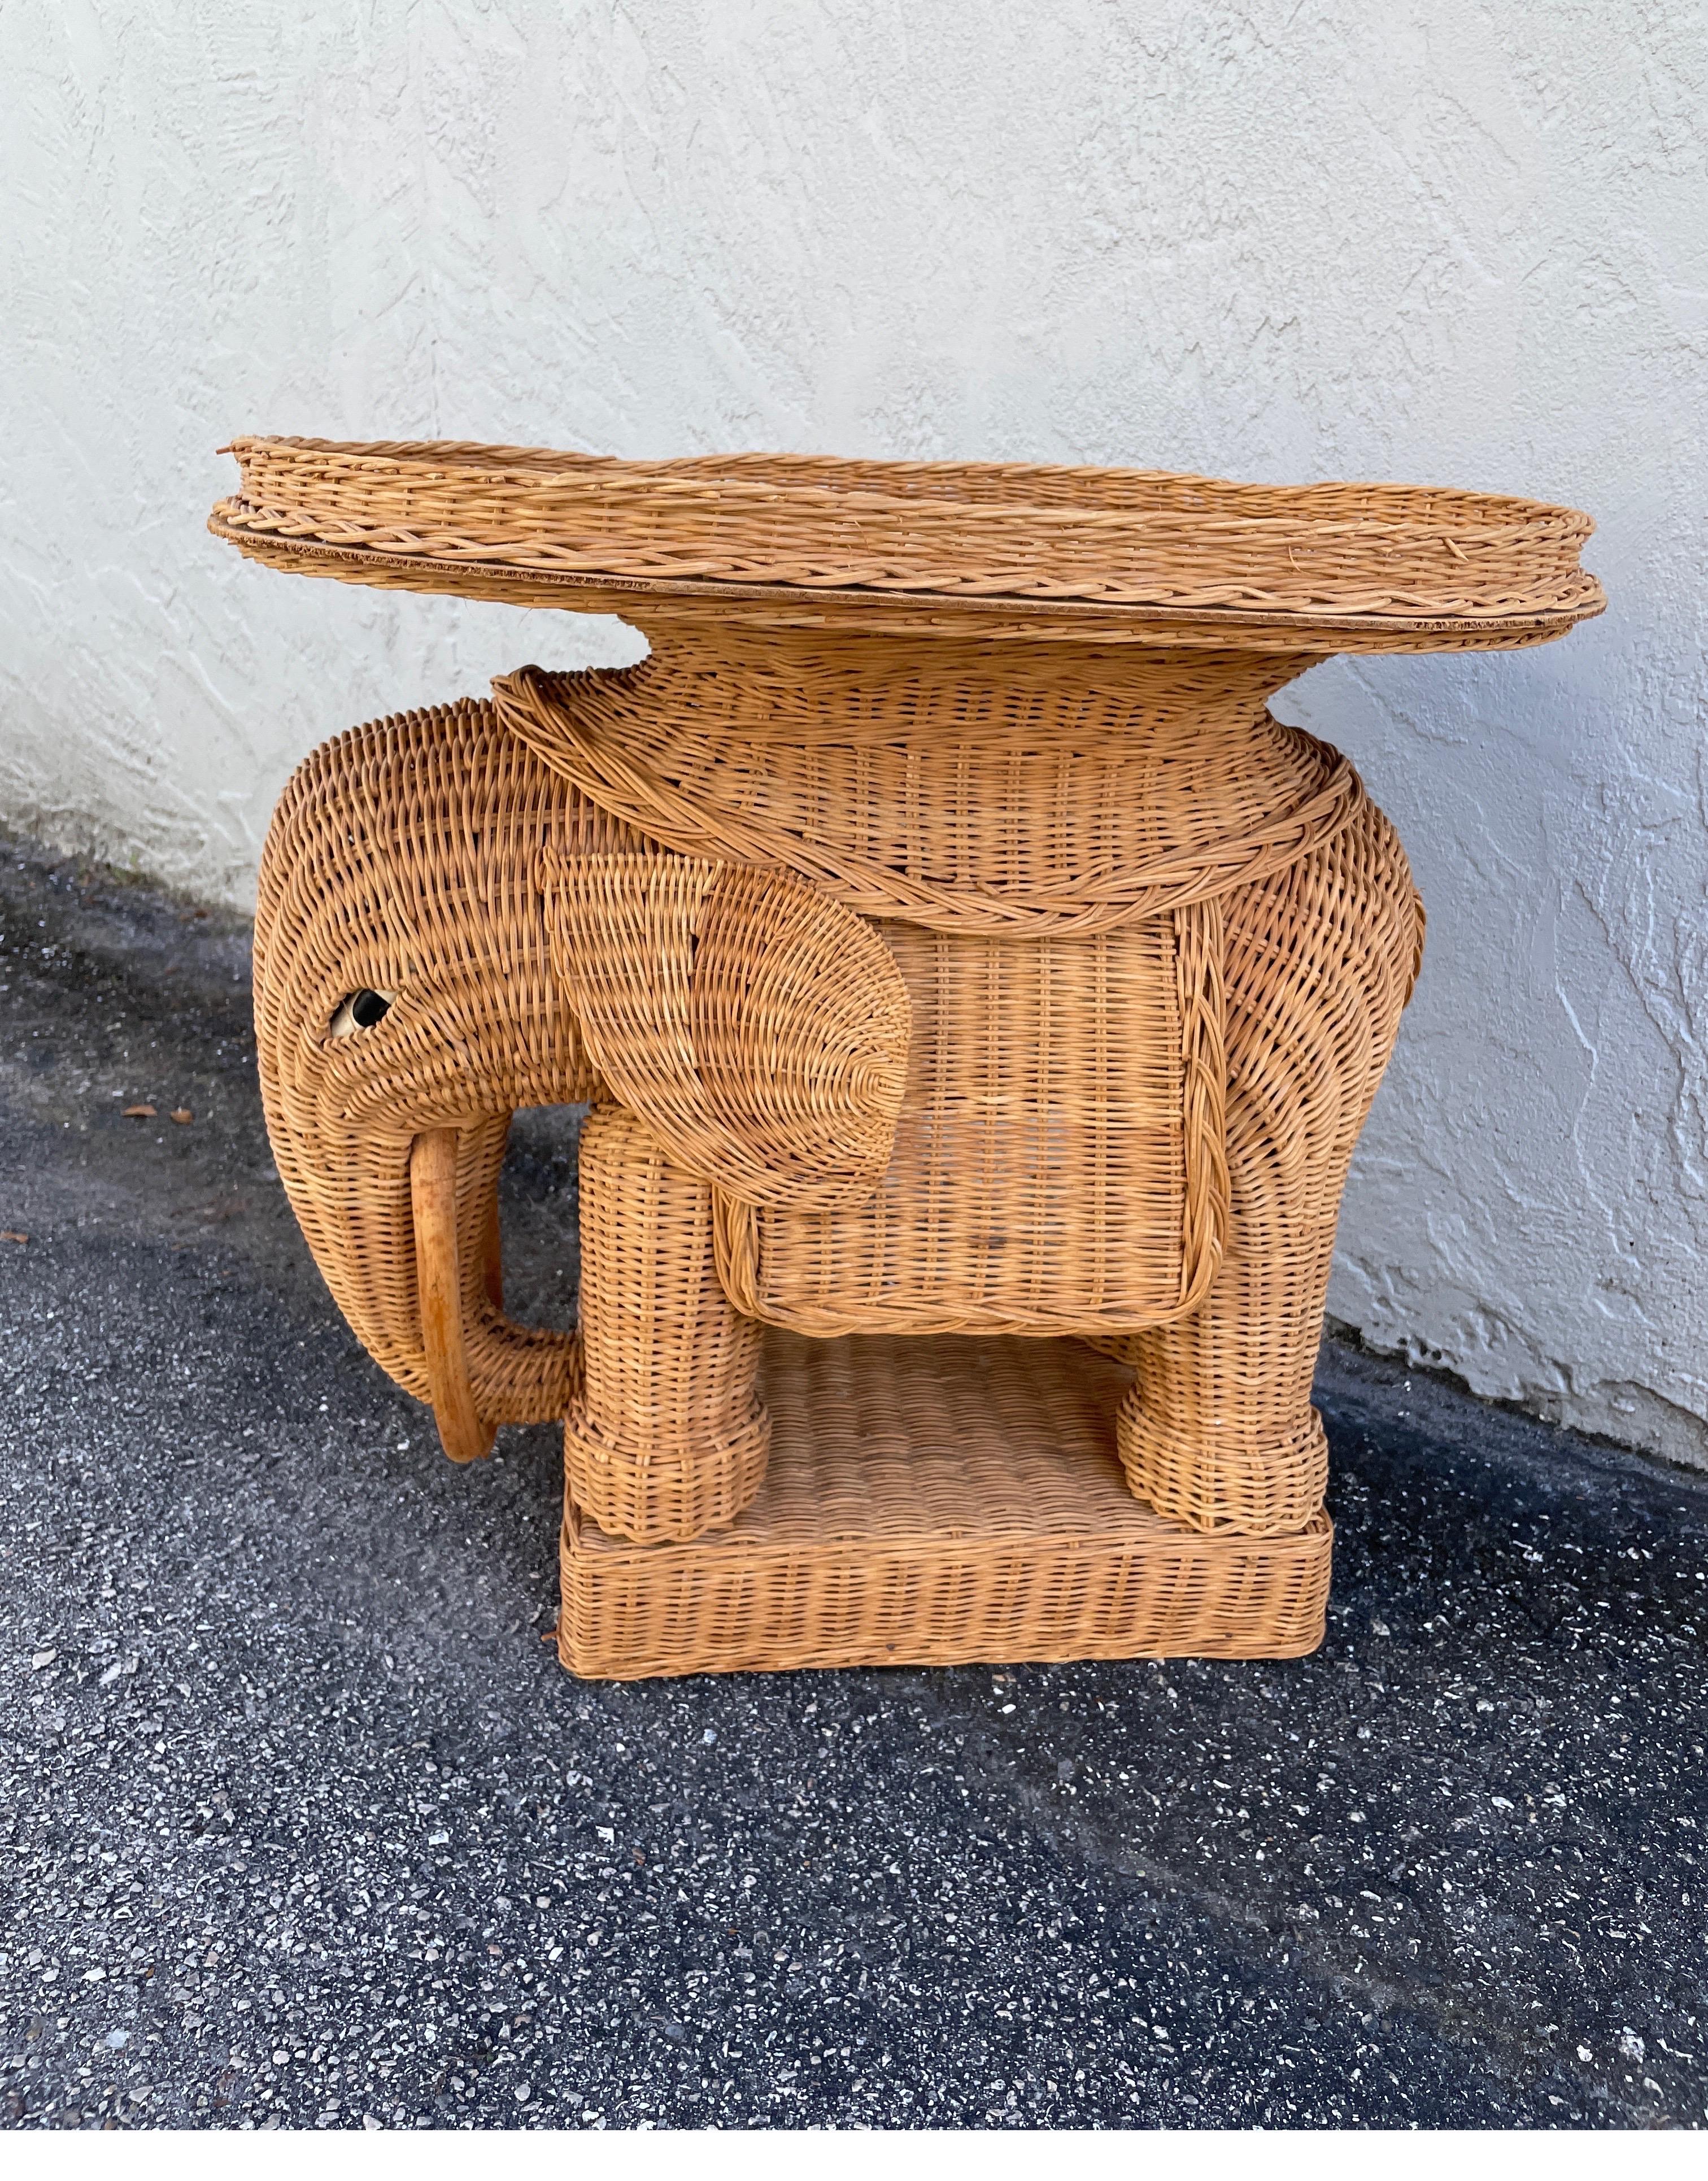 wicker elephant table vintage